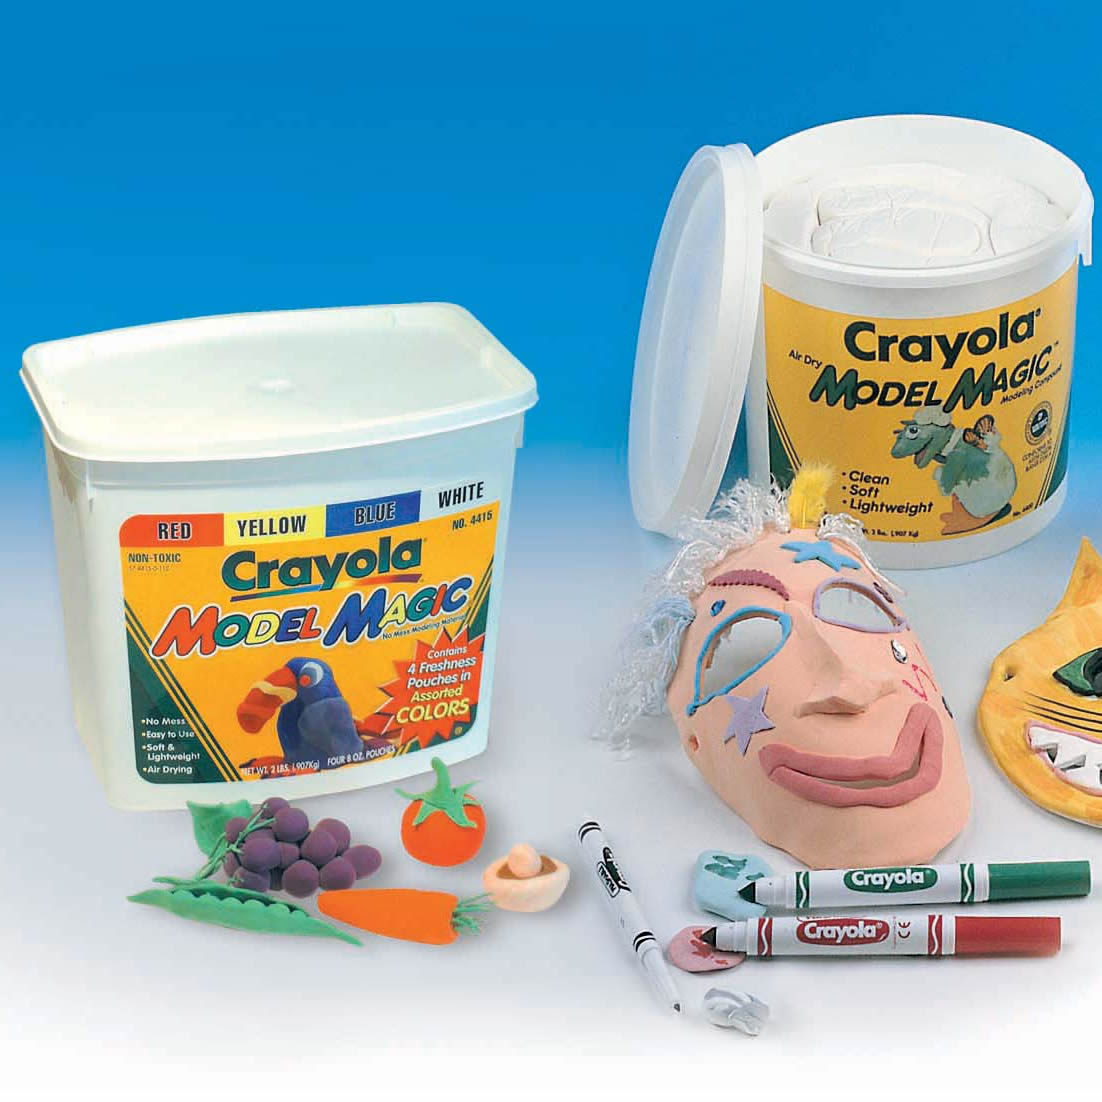 Crayola Air-Dry Clay 10lb Bulk